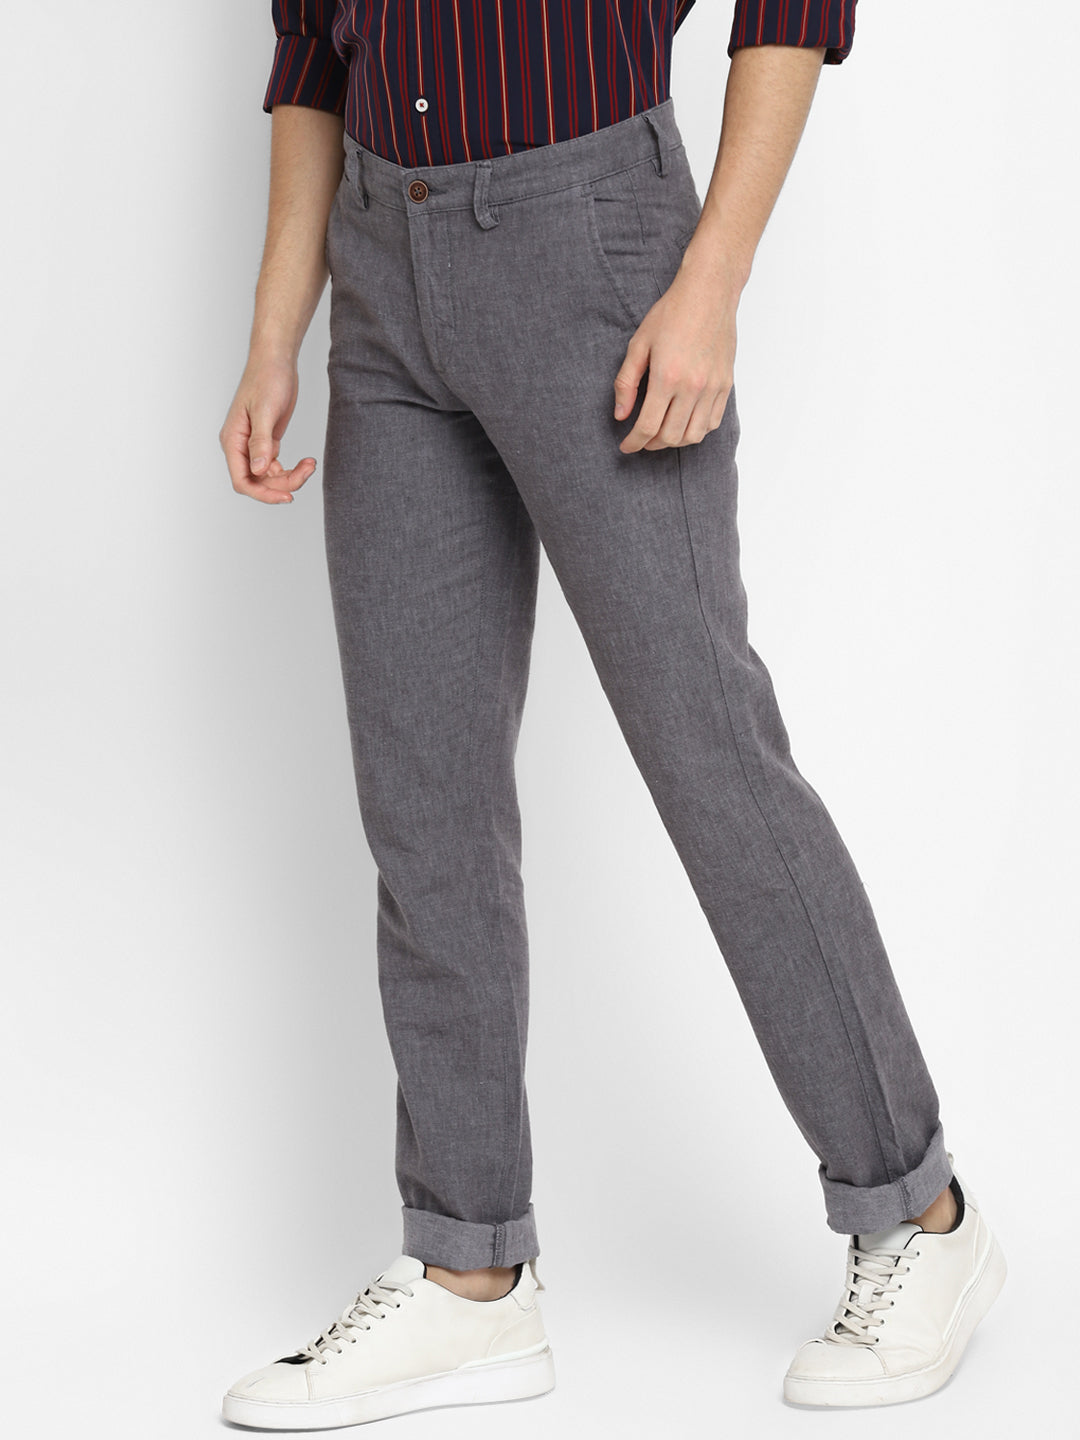 Cotton Linen Grey Plain Ultra Slim Fit Flat Front Casual Trouser